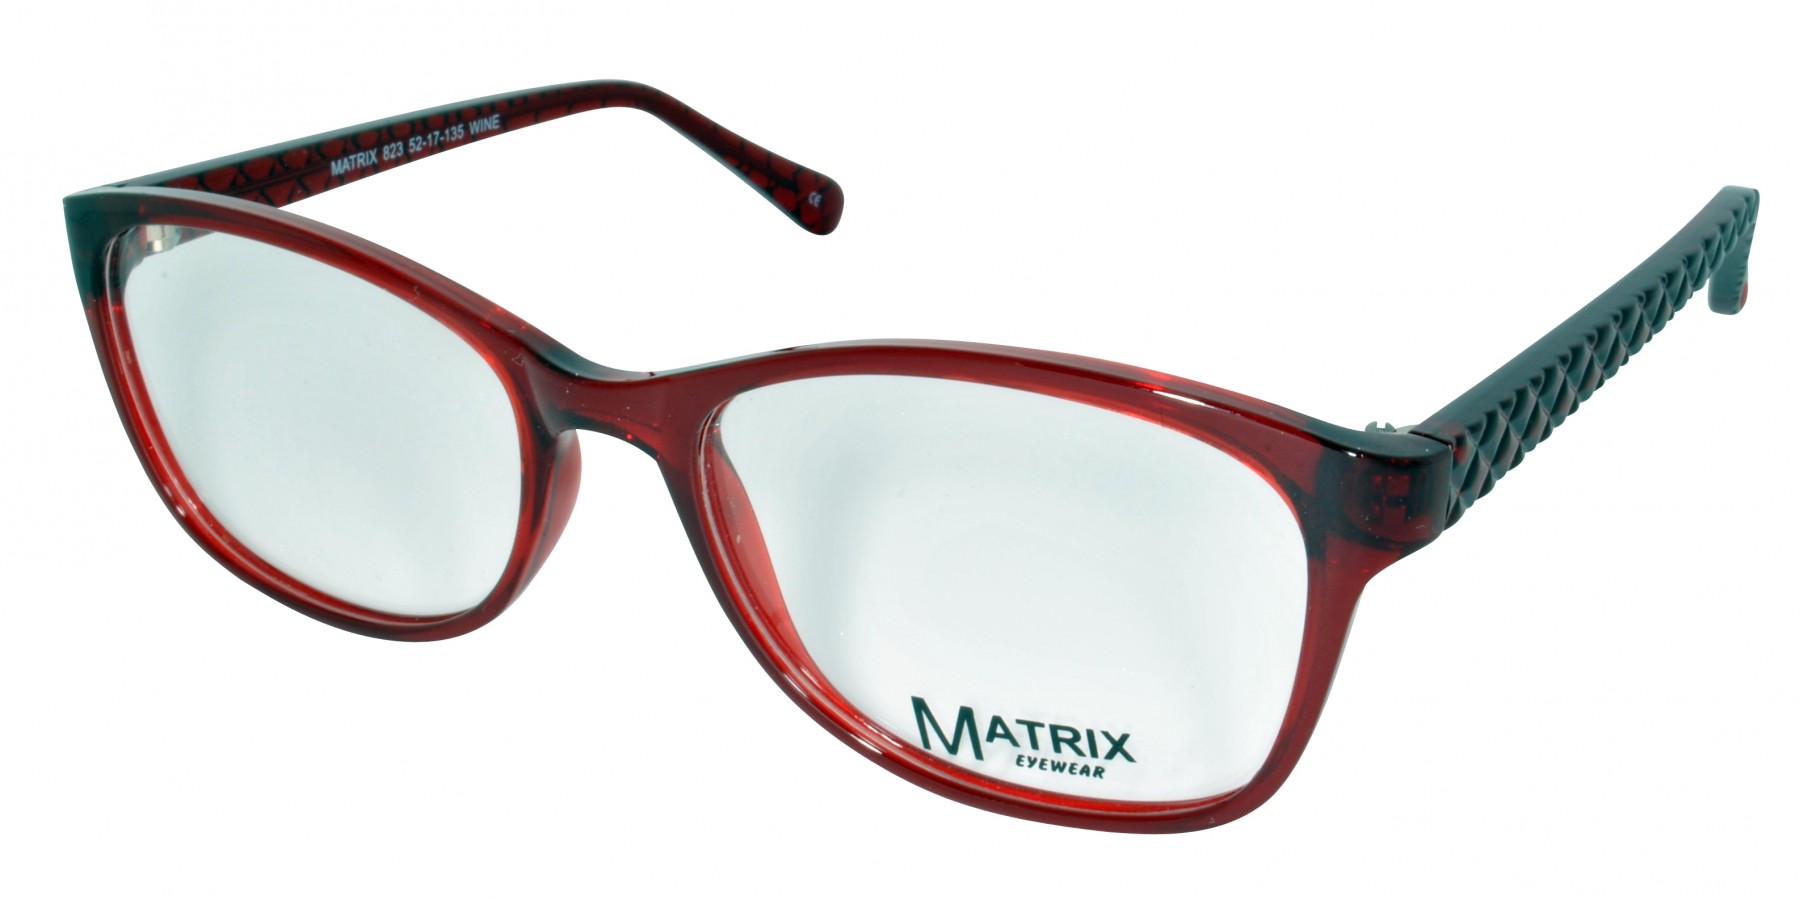 Matrix 823 Prescription Glasses